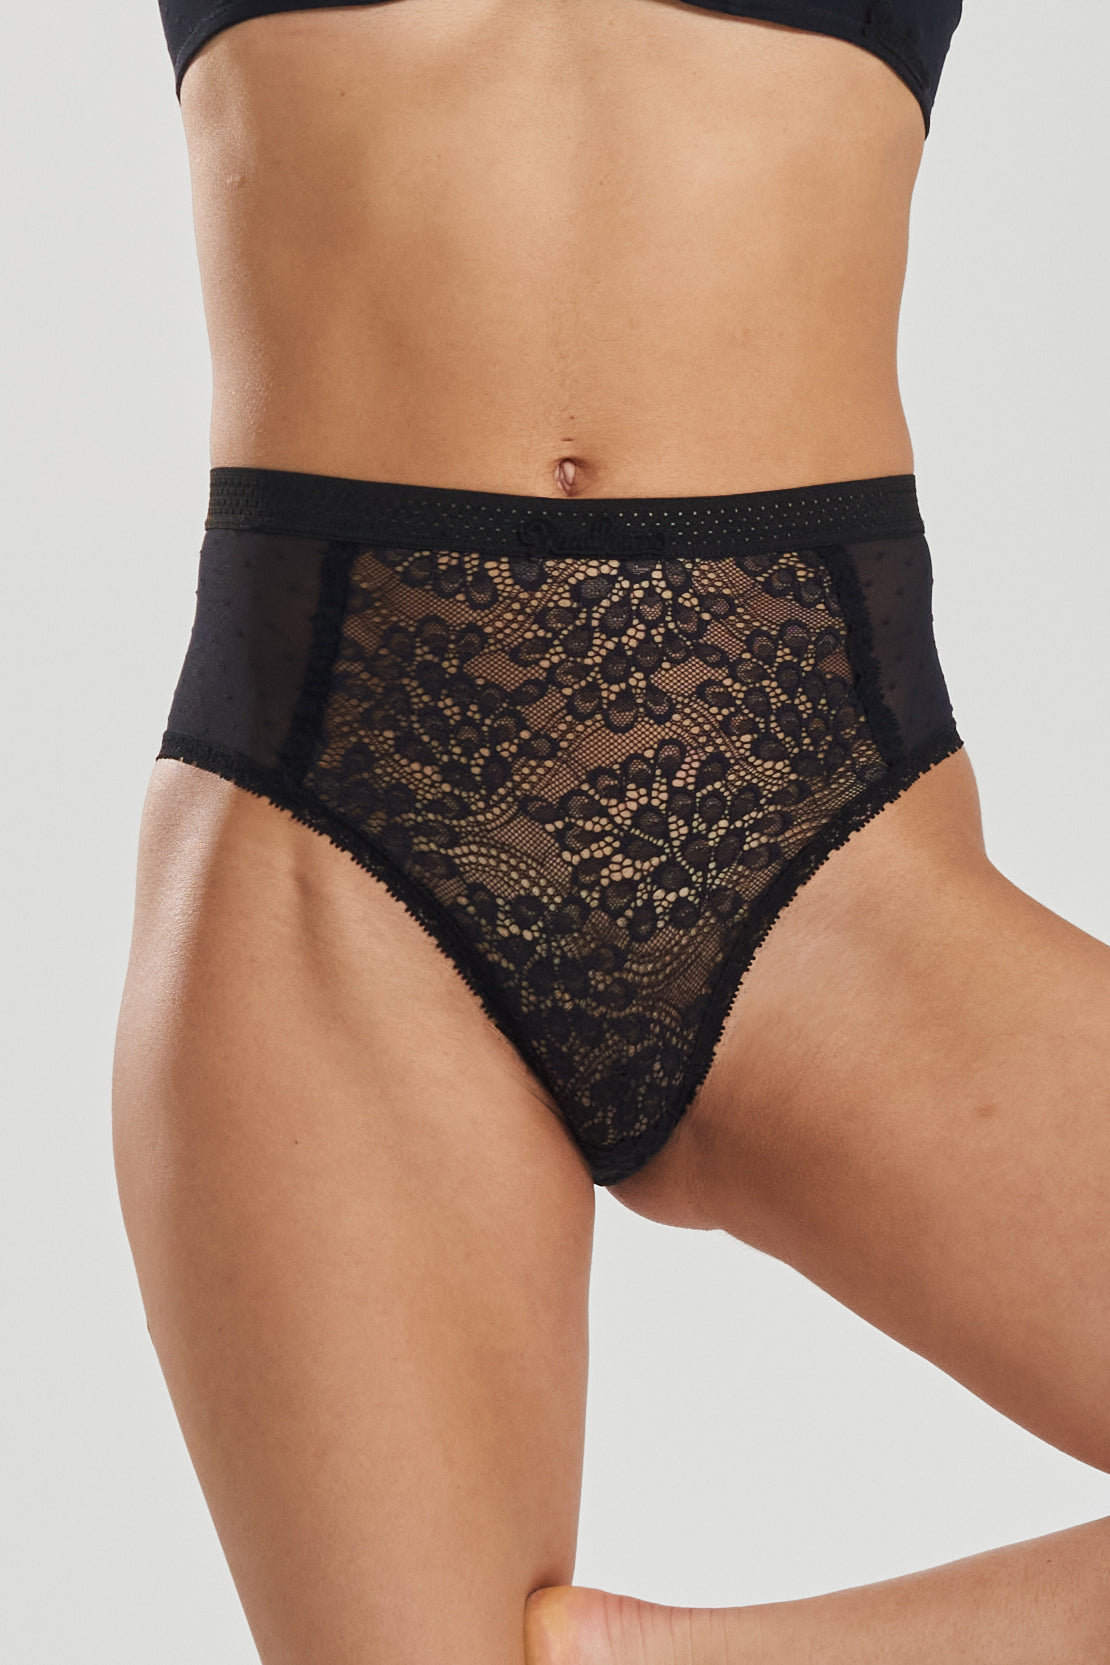 LBECLEY High Cut Panties for Women Panties for Women Crochet Lace